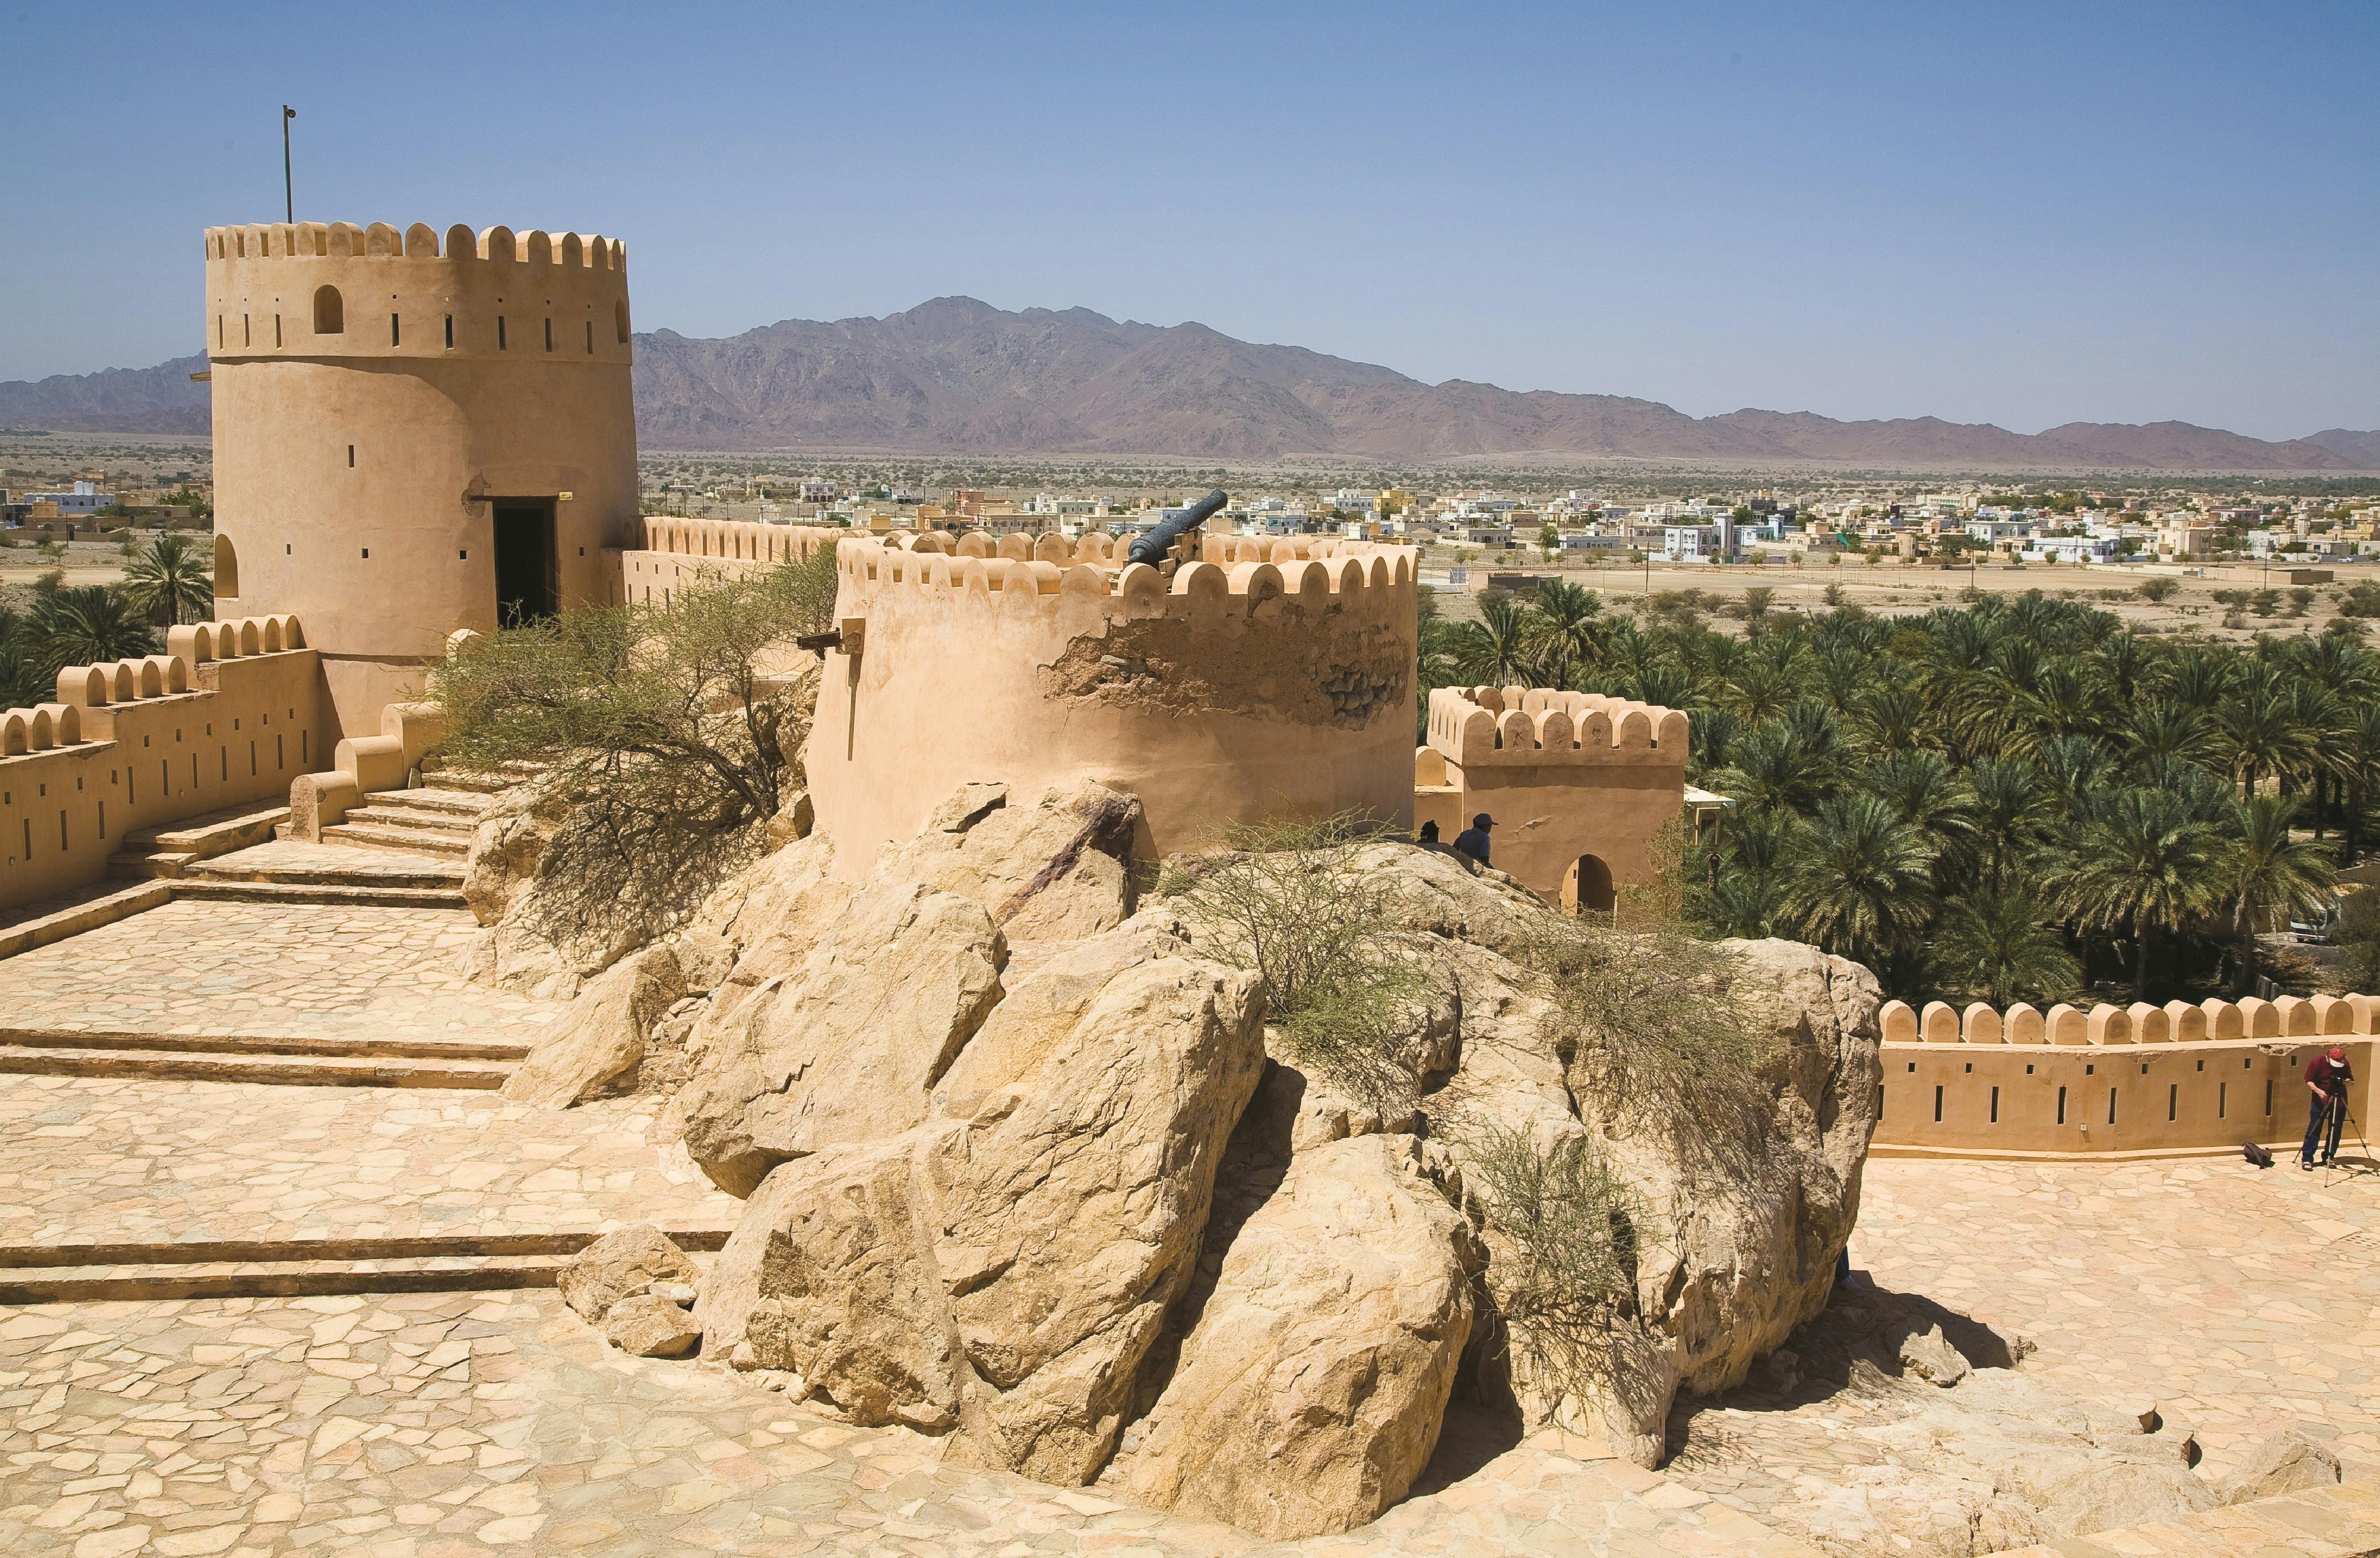 Noord- en Nakhl Fort-tour vanuit Muscat